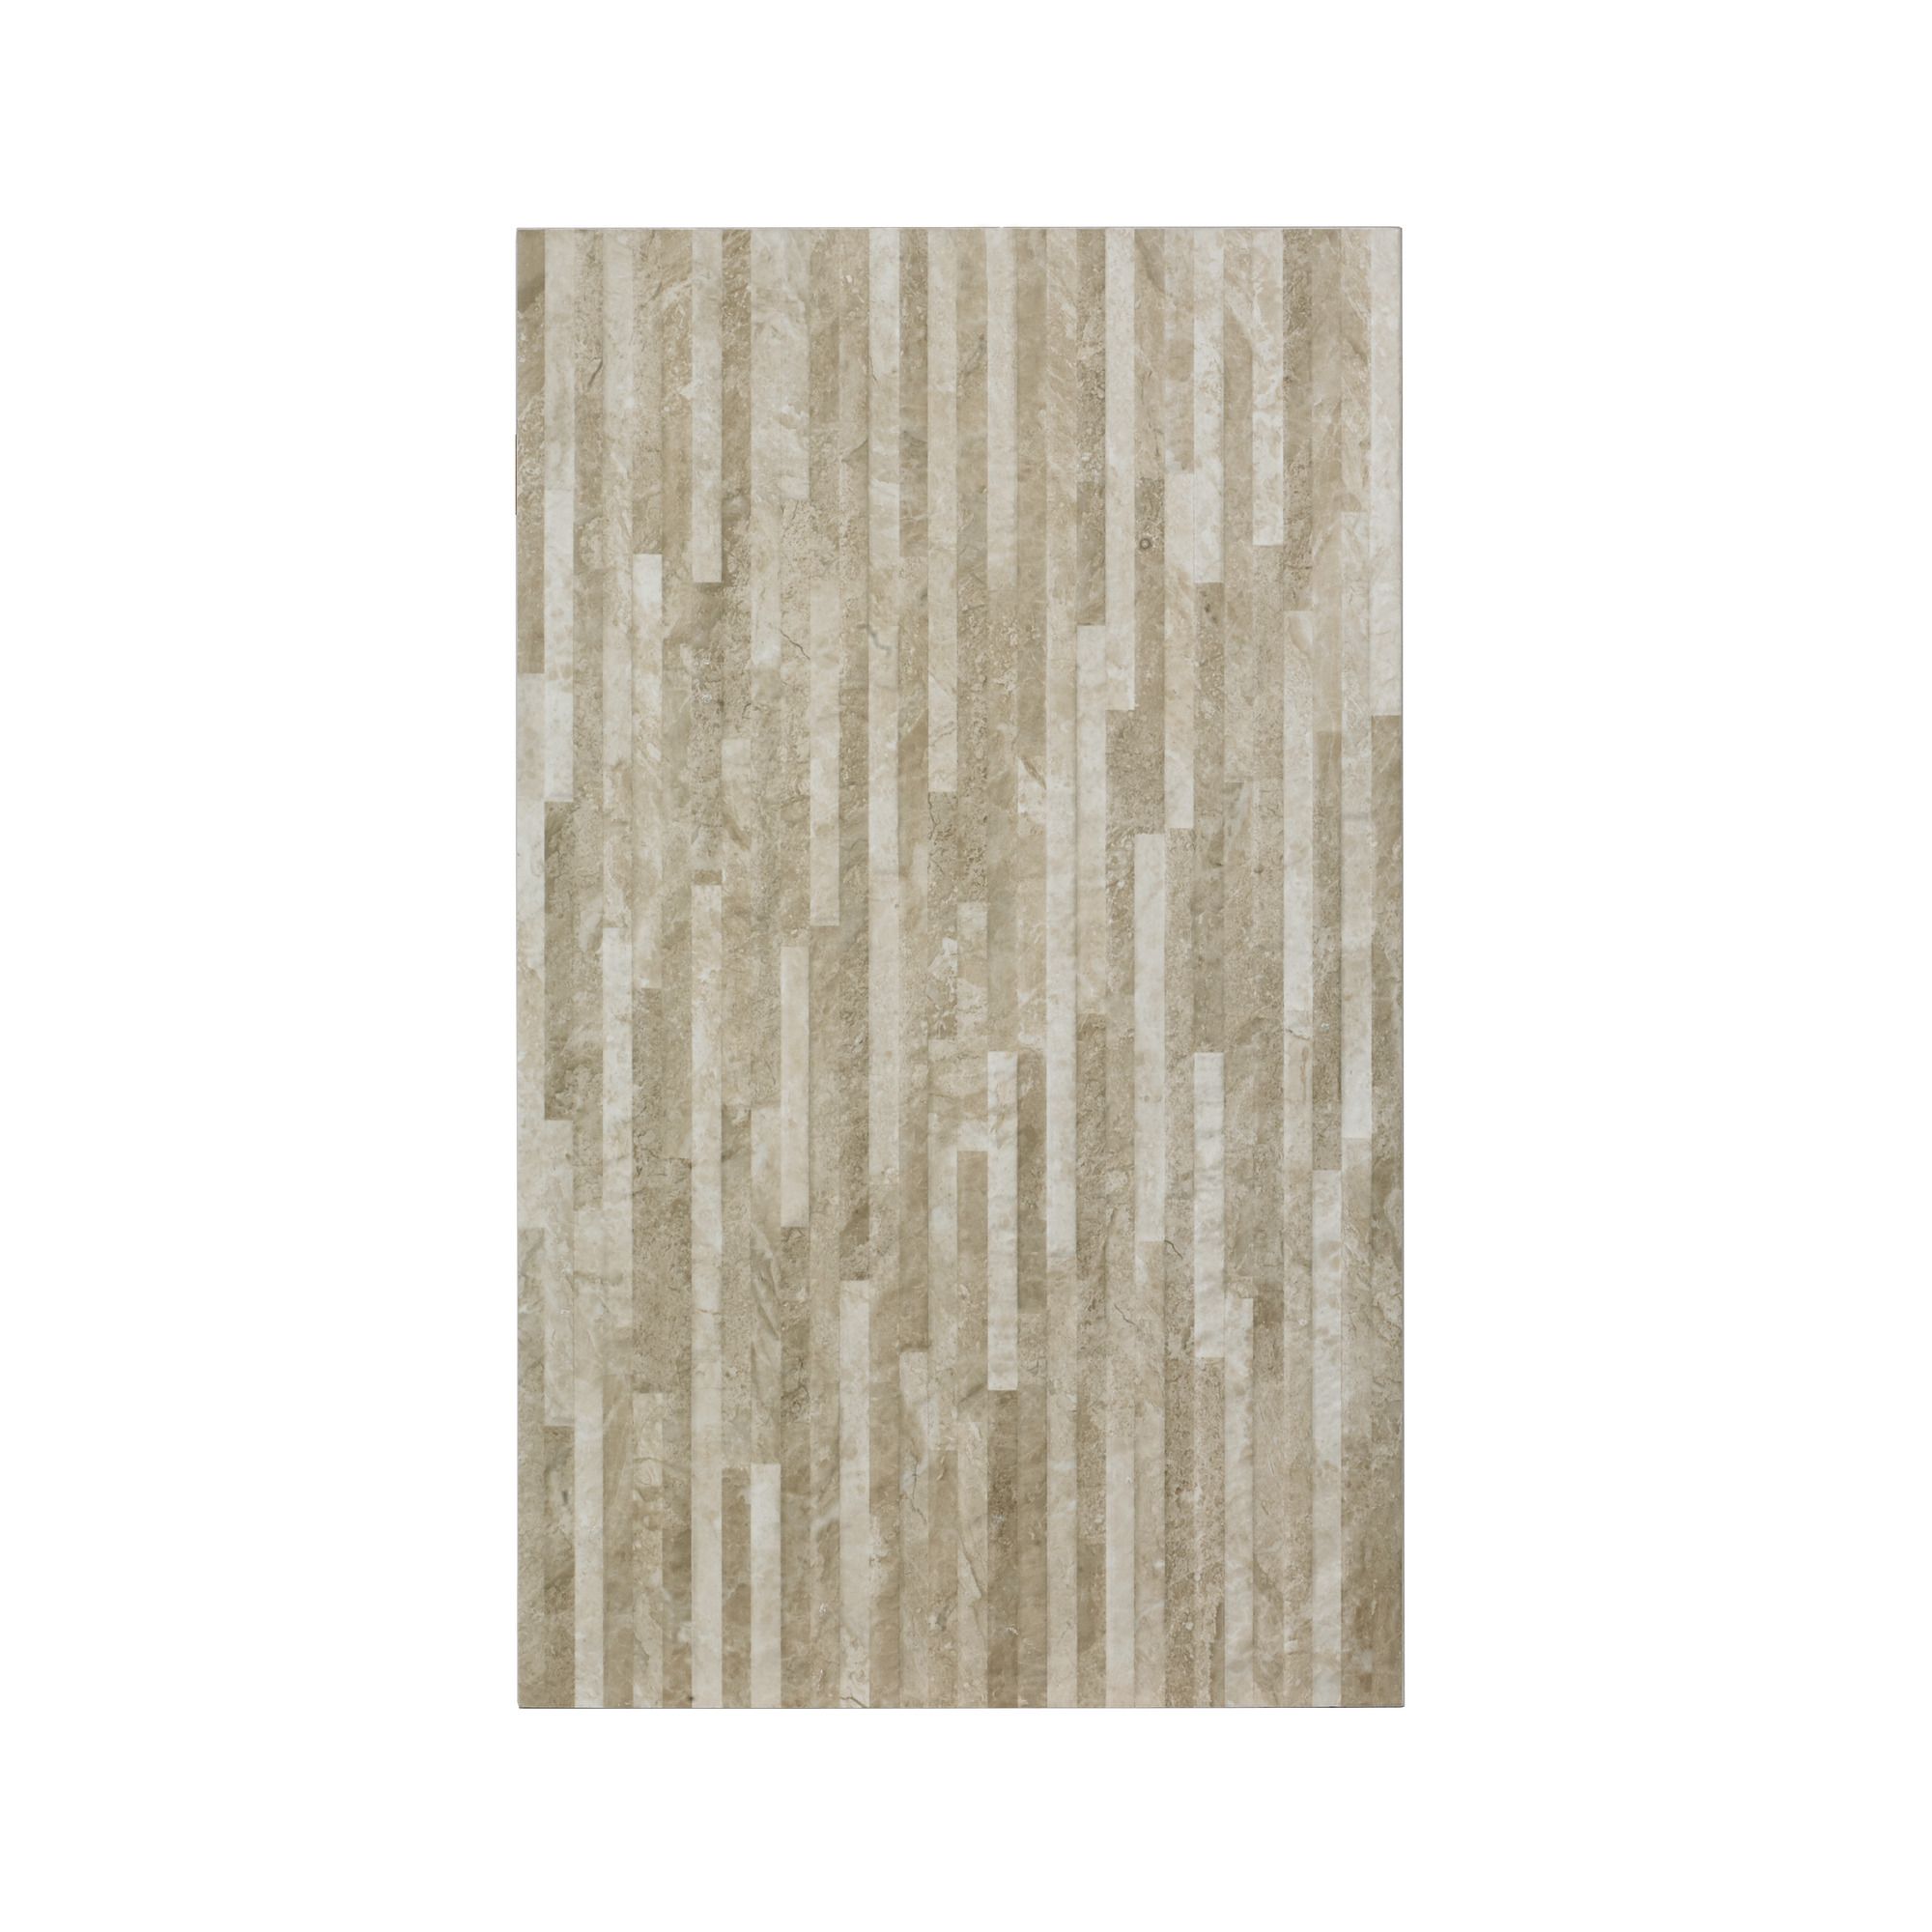 Haver Sand & chalk mix Matt Sandstone effect Ceramic Wall Tile, Pack of 6, (L)300mm (W)600mm